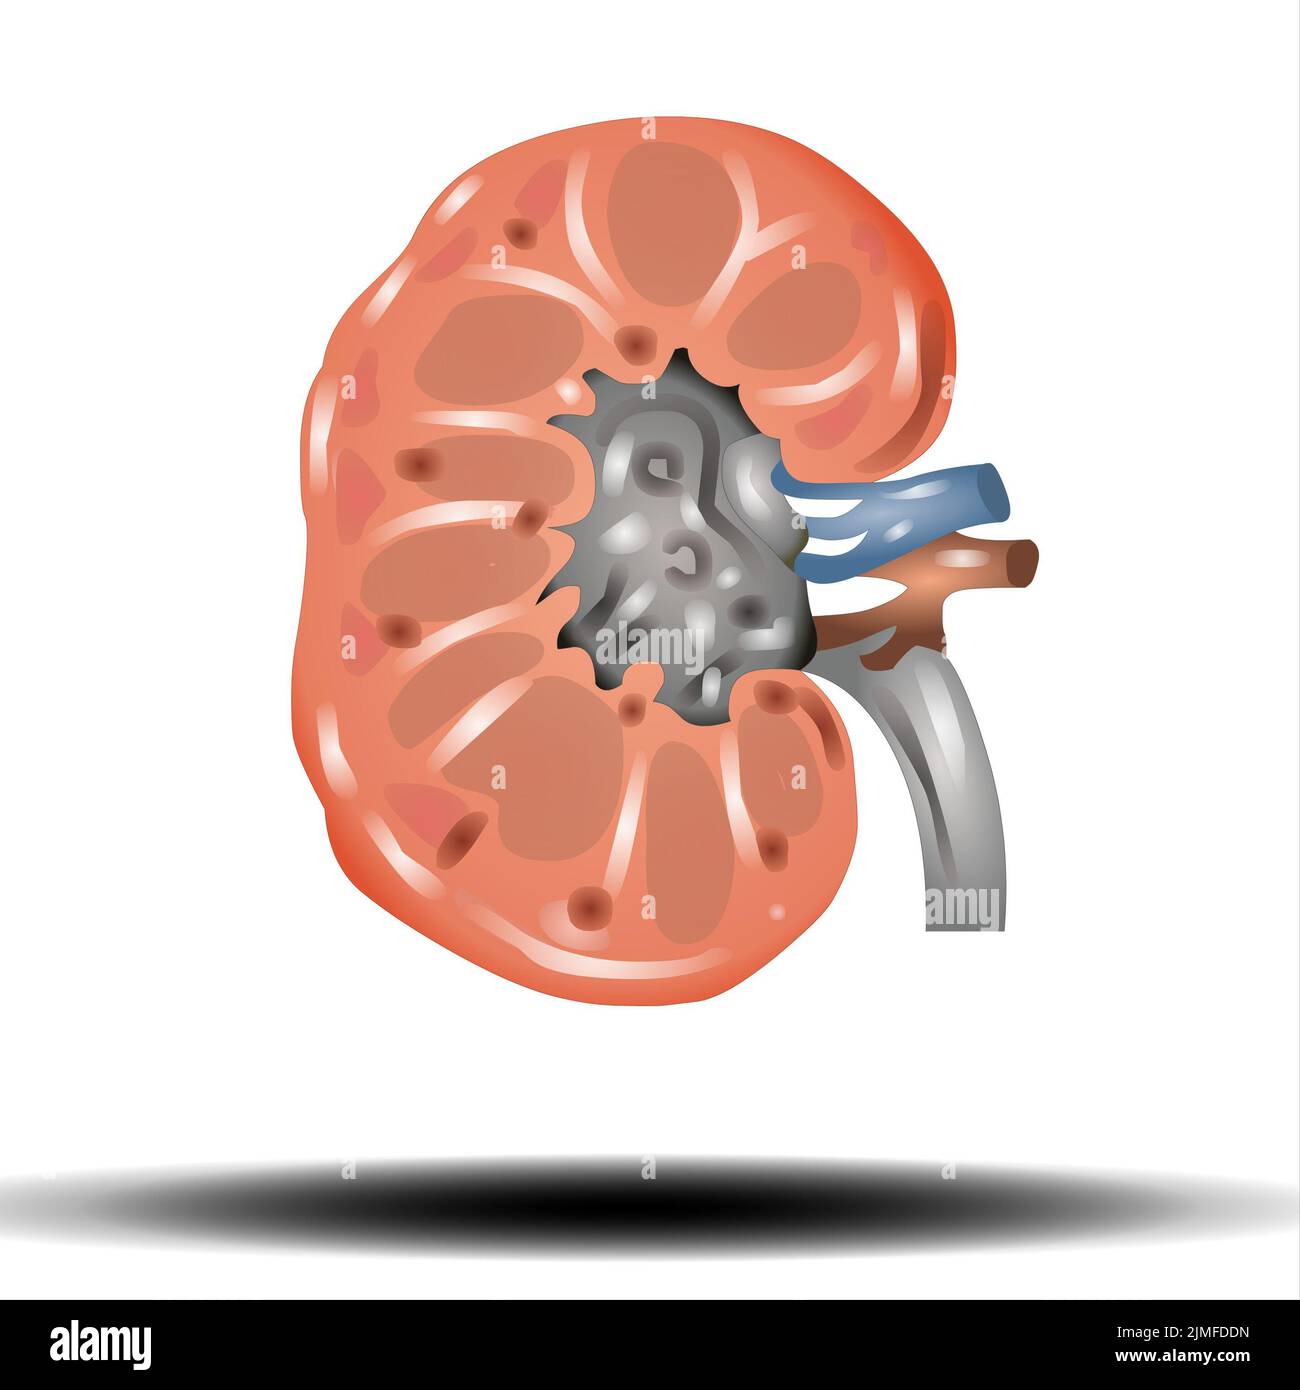 Kidney - internal organ, Kidney stones. Renal calculi, nephrolithiasis or urolithiasis. Healthcare concept, vector illustration on white background Stock Photo